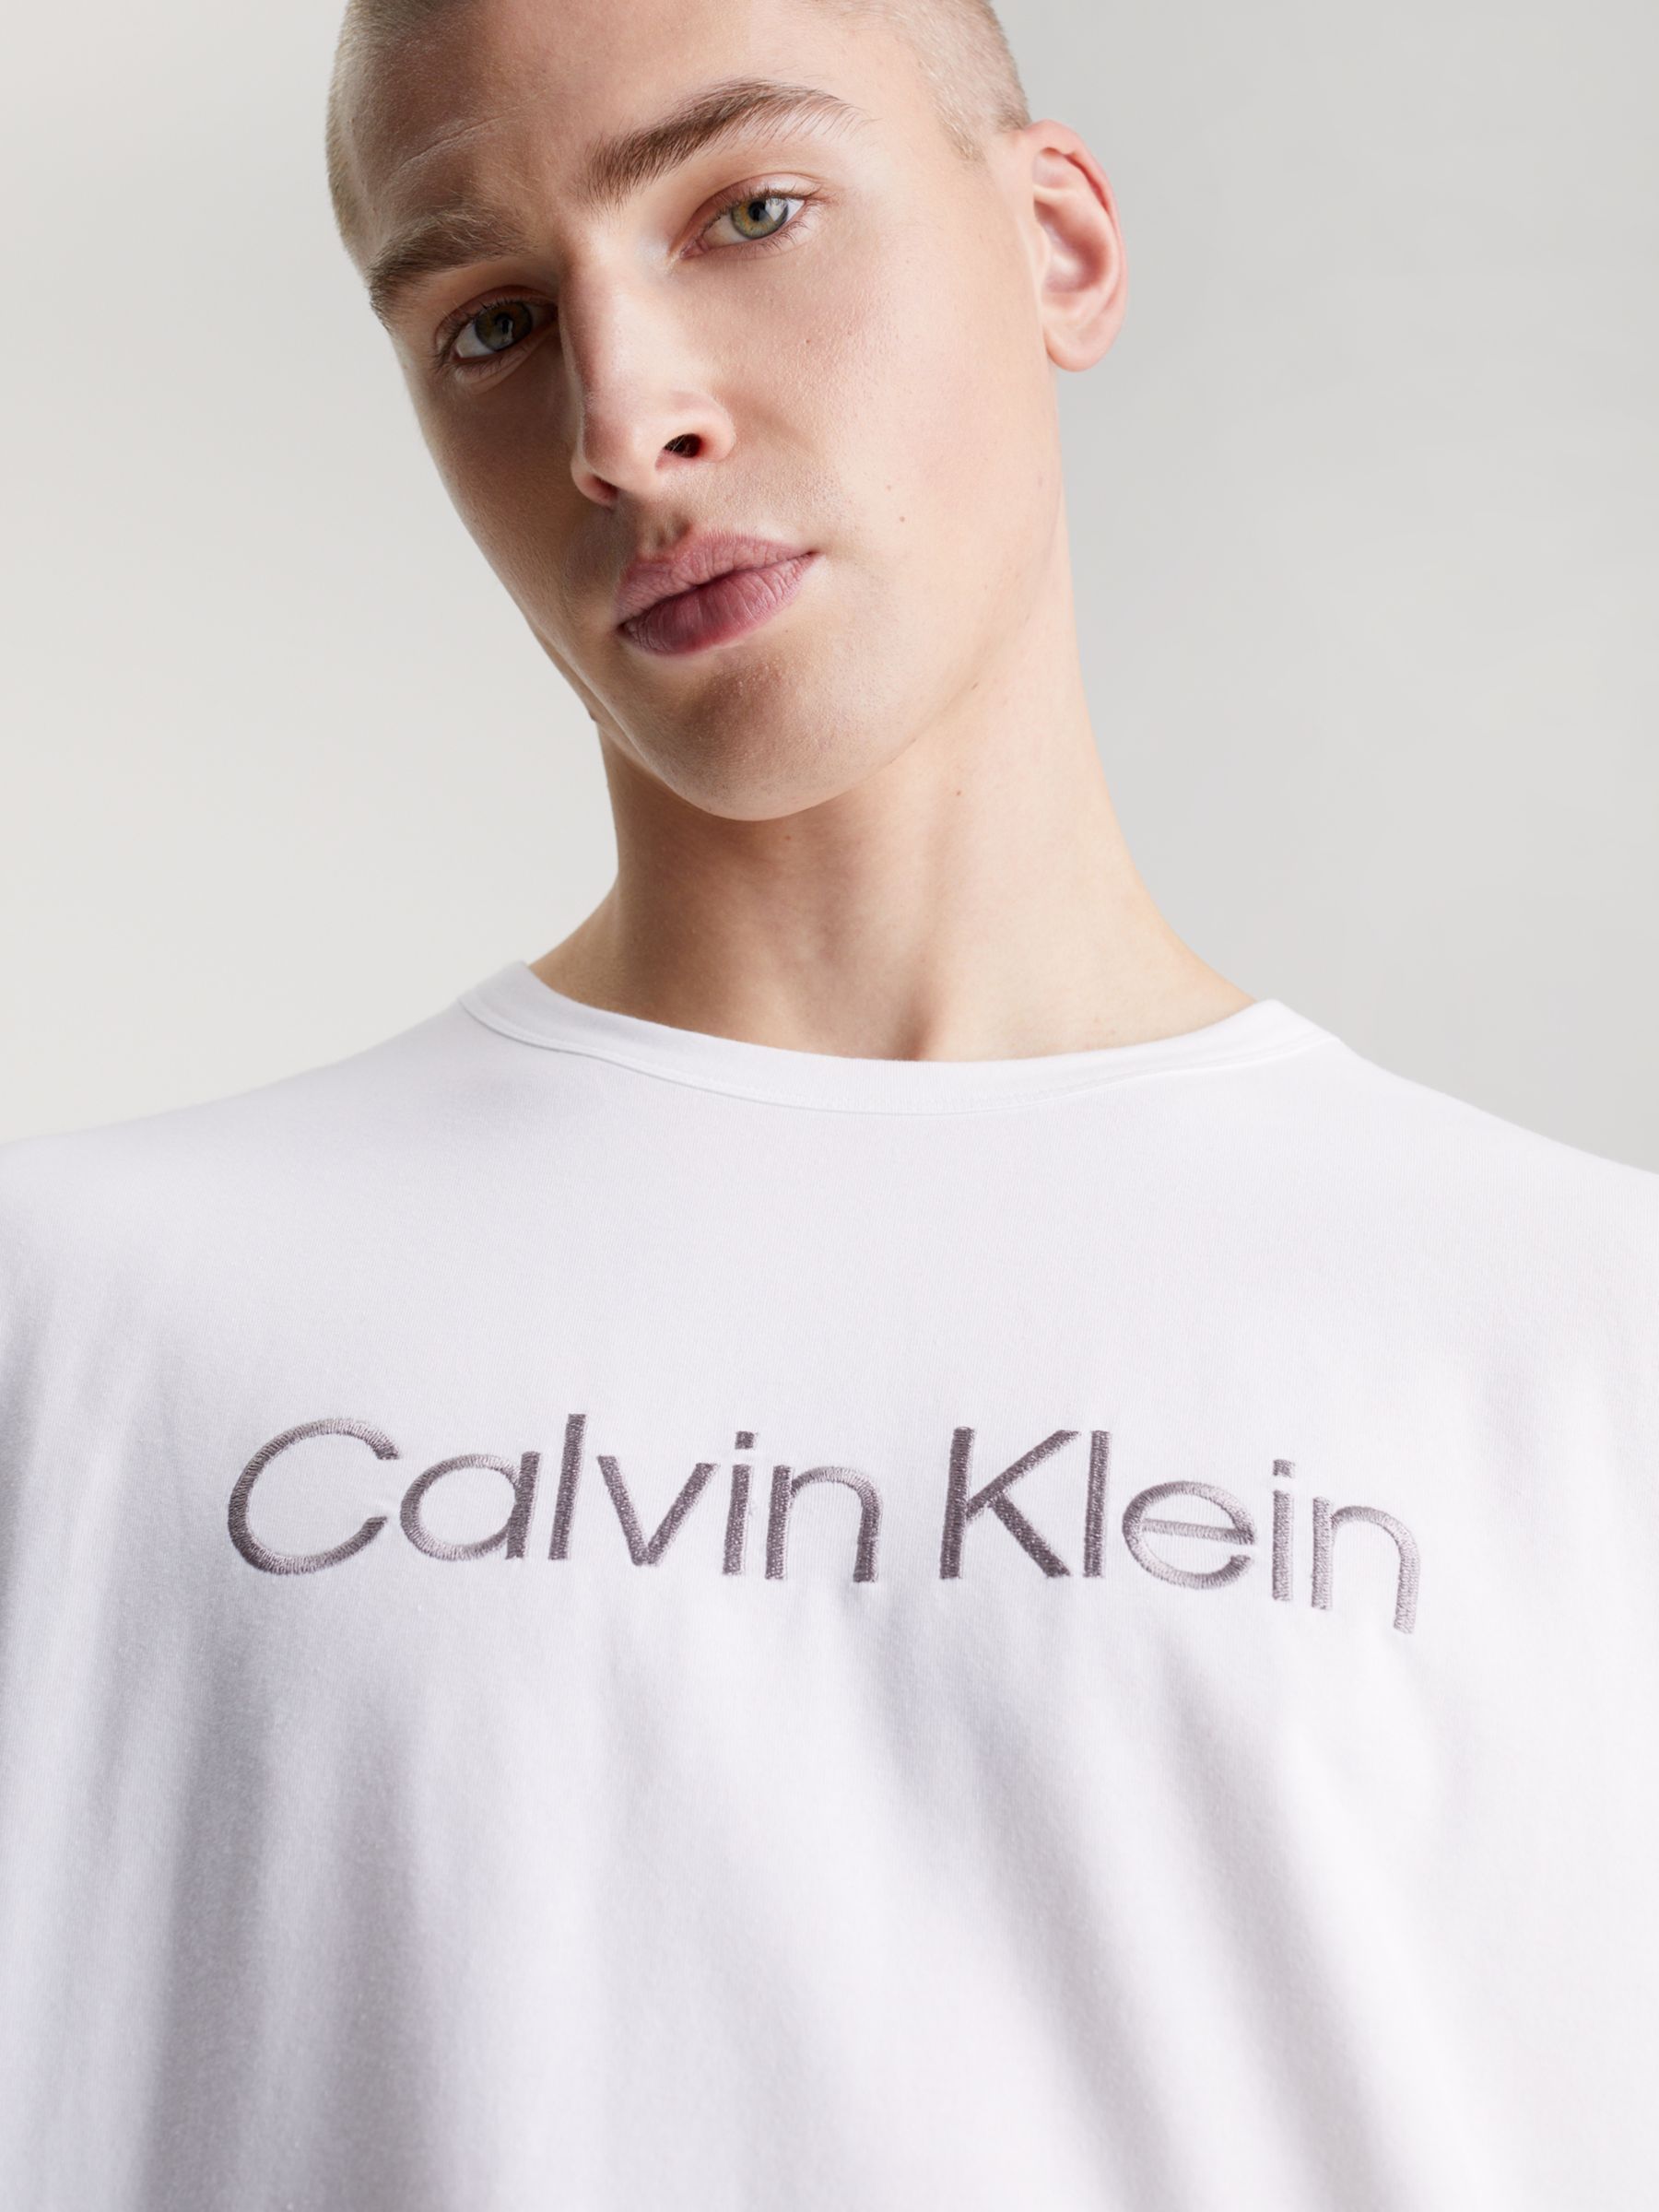 Buy Calvin Klein Slogan Crew Neck Lounge Top, White Online at johnlewis.com